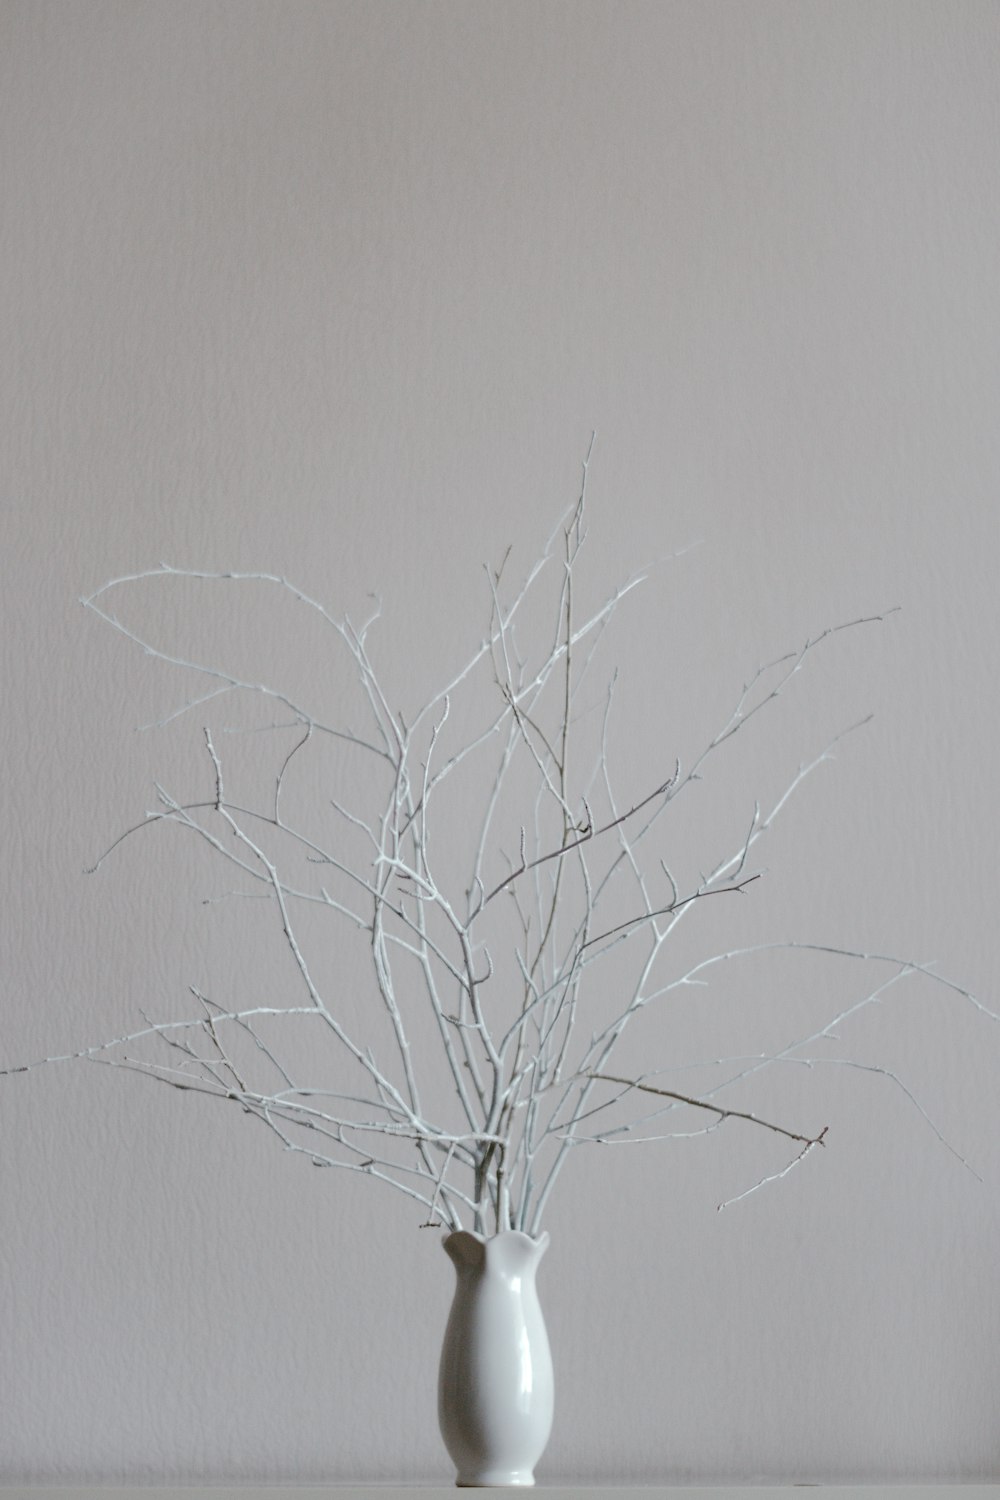 albero senza foglie sulla parete bianca